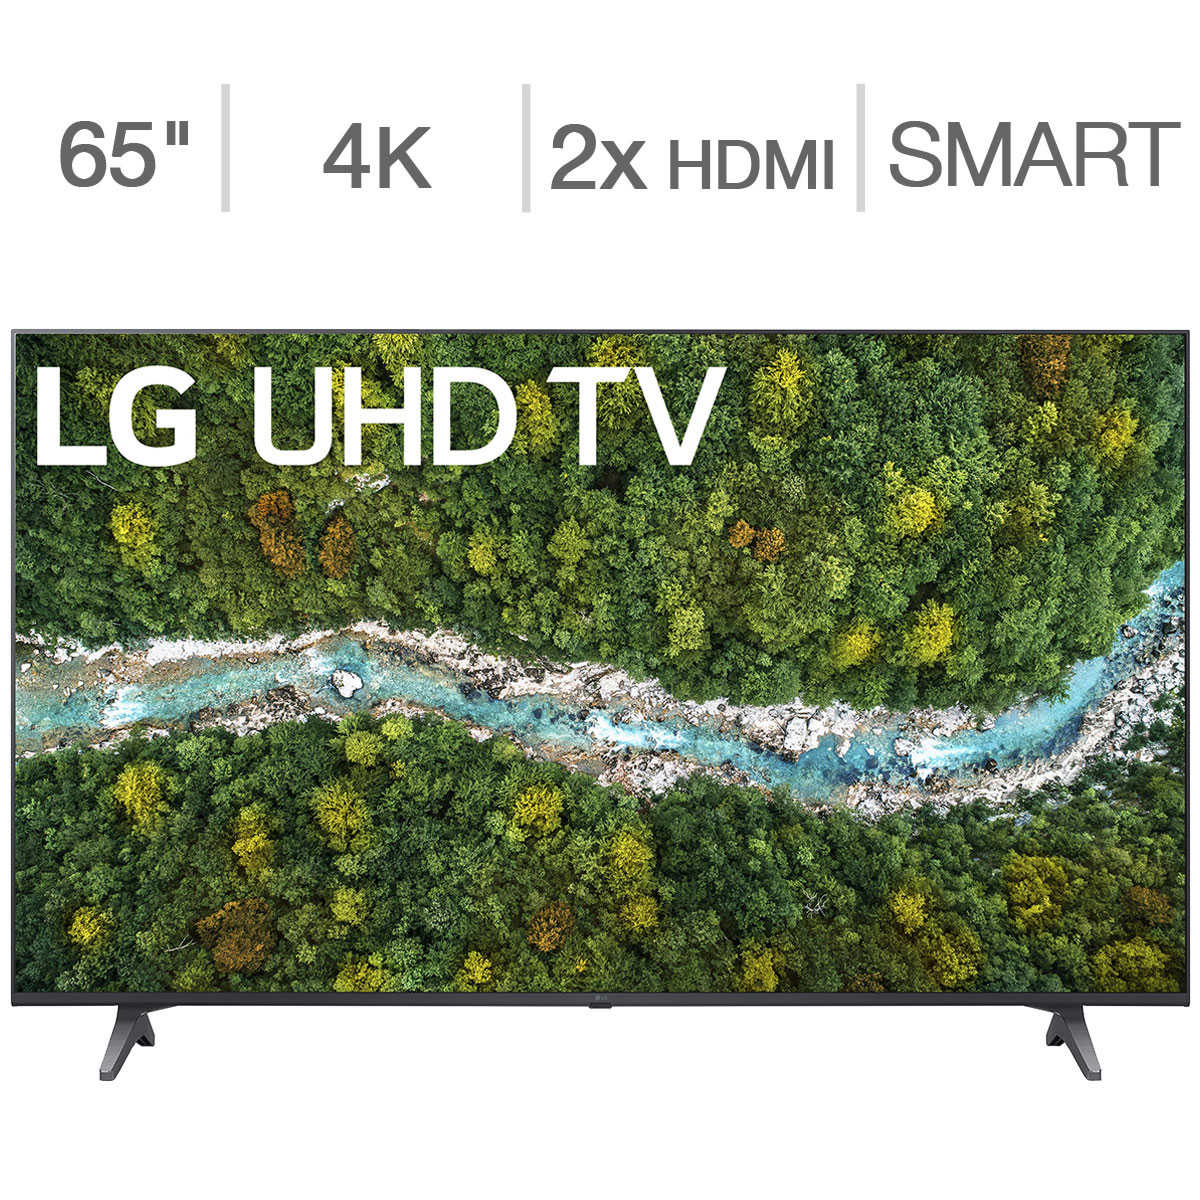 LG 65" Class - UP7670 Series - 4K UHD LED LCD TV $499